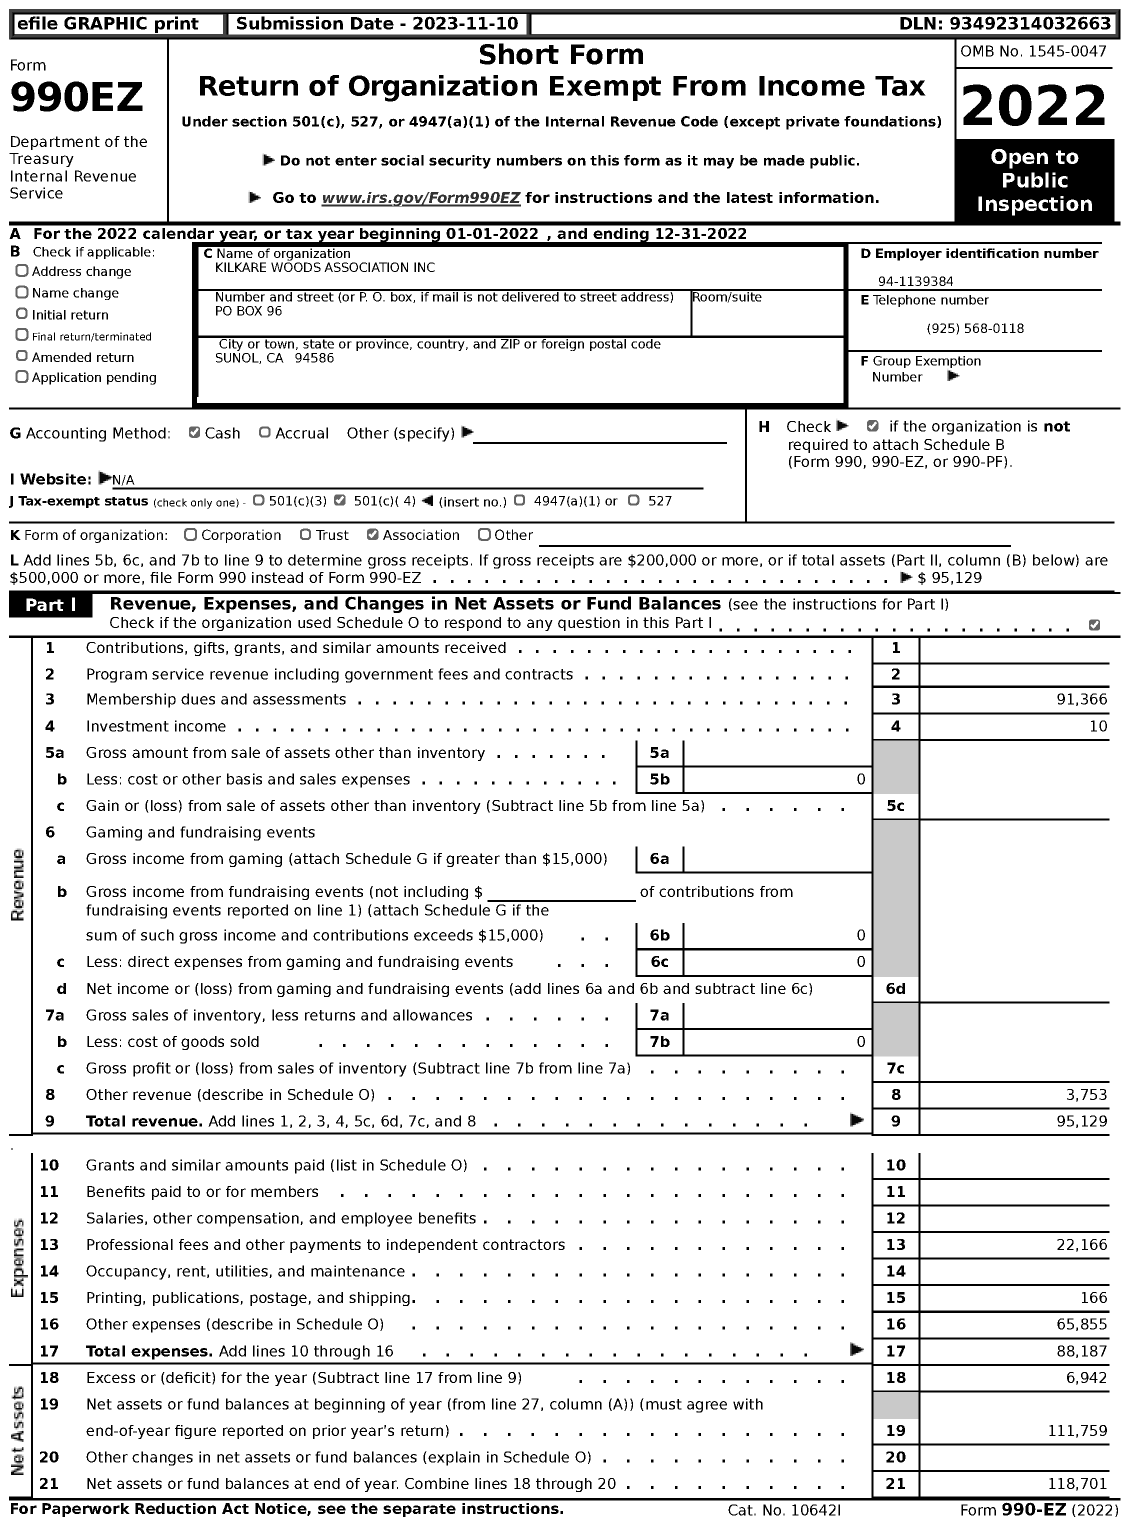 Image of first page of 2022 Form 990EZ for Kilkare Woods Association